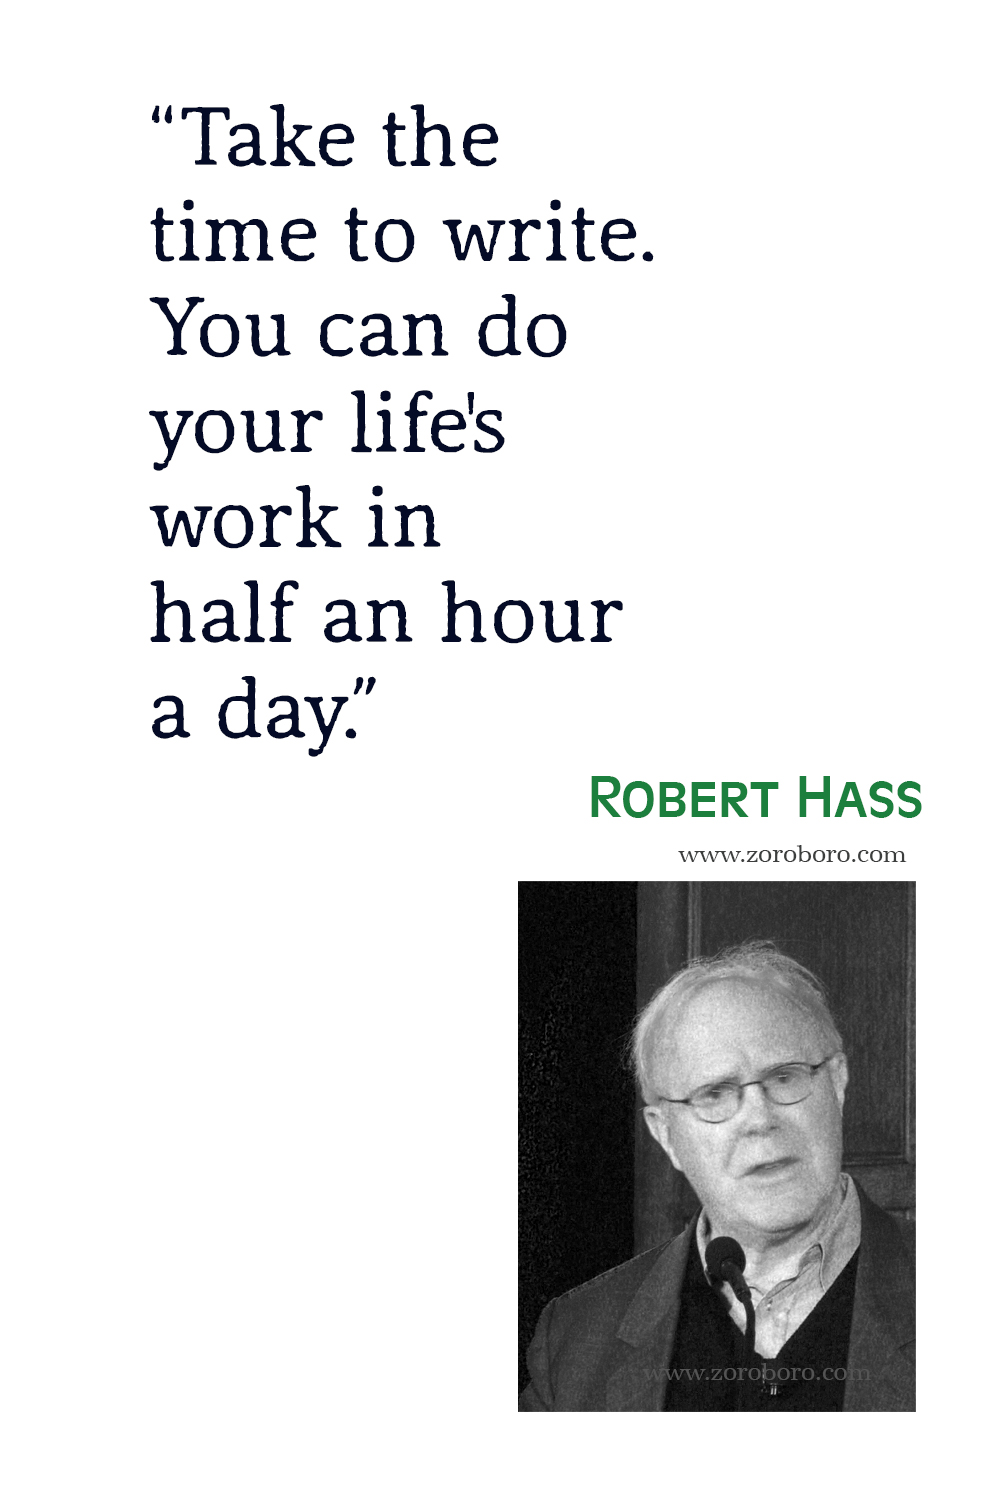 Robert Hass Quotes, Robert Hass Praise Quotes, Selected Haiku by Robert Hass, Robert Hass Poems, Robert Hass Poetry, Robert Hass .